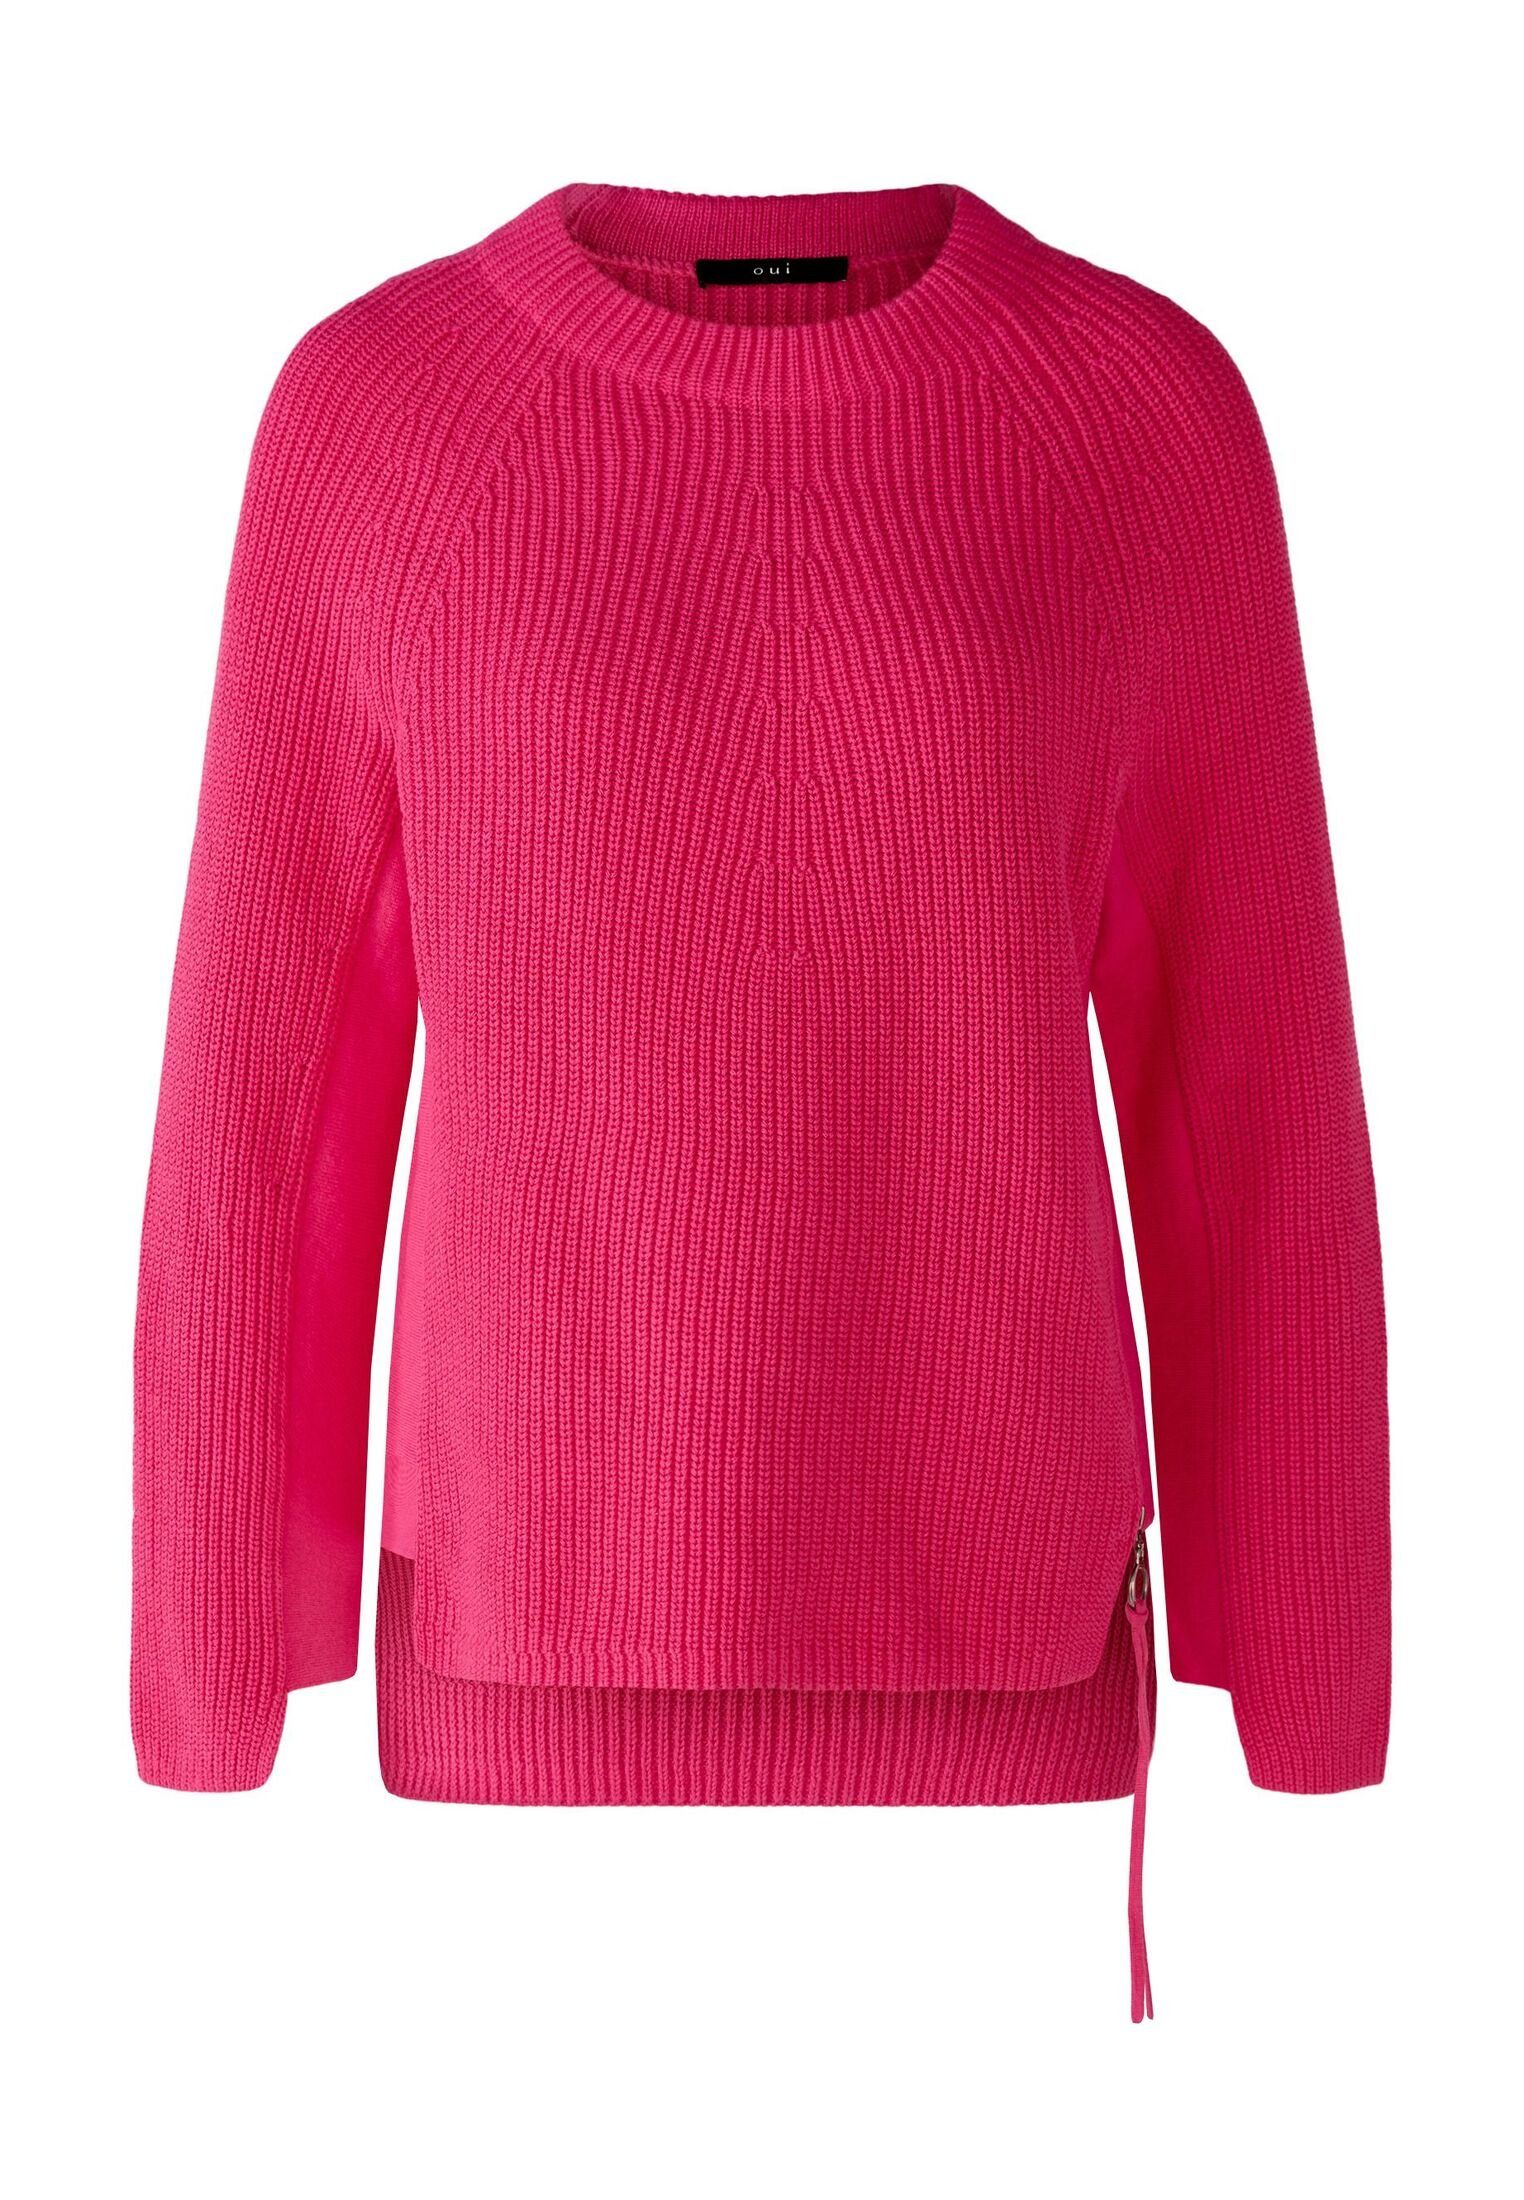 Oui Strickpullover Pullover RUBI dark pink